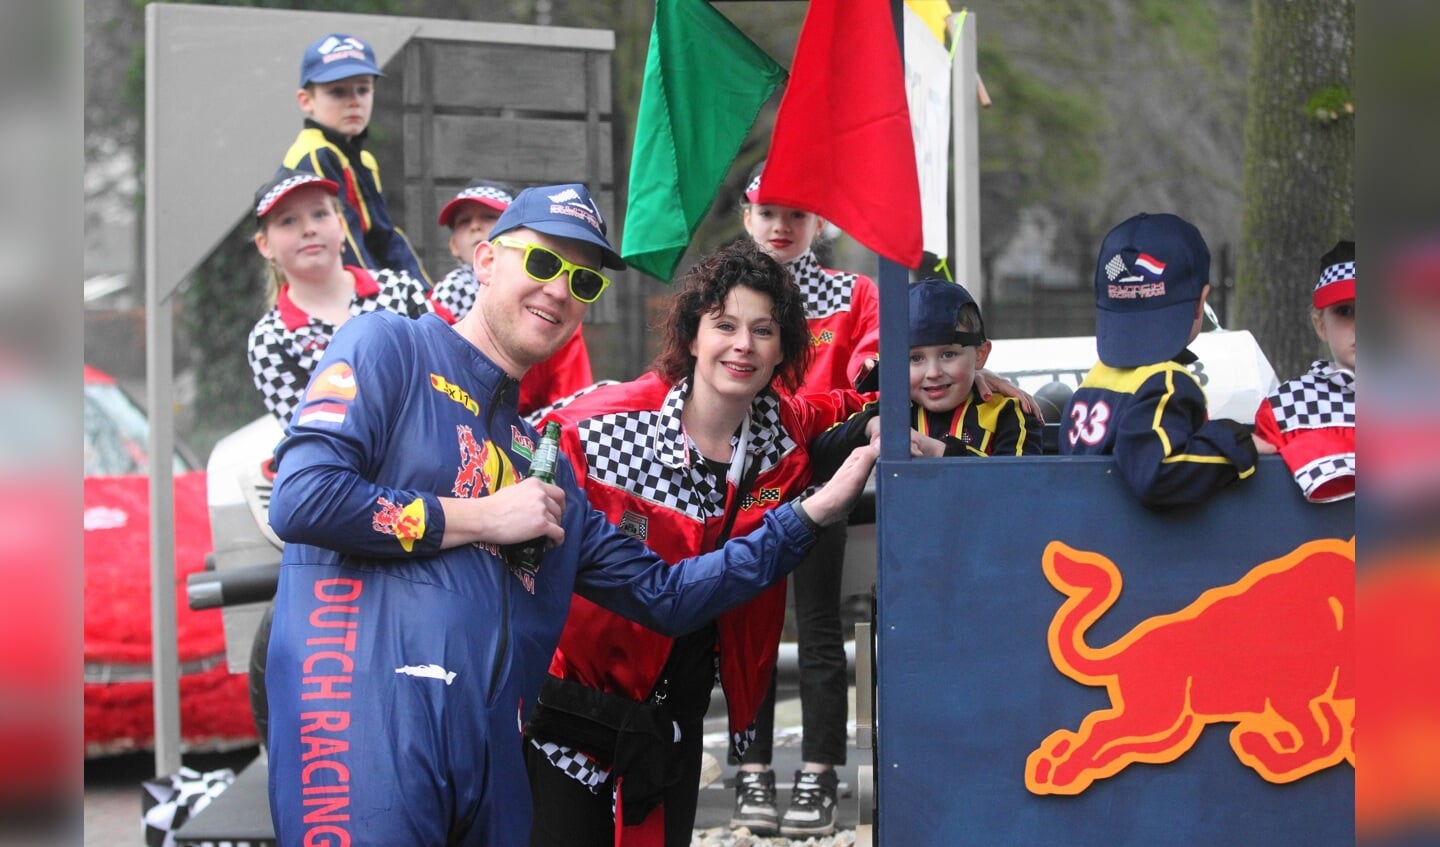 De Red Bull groep. Foto: RTV Ideaal/ Albert Schreuder